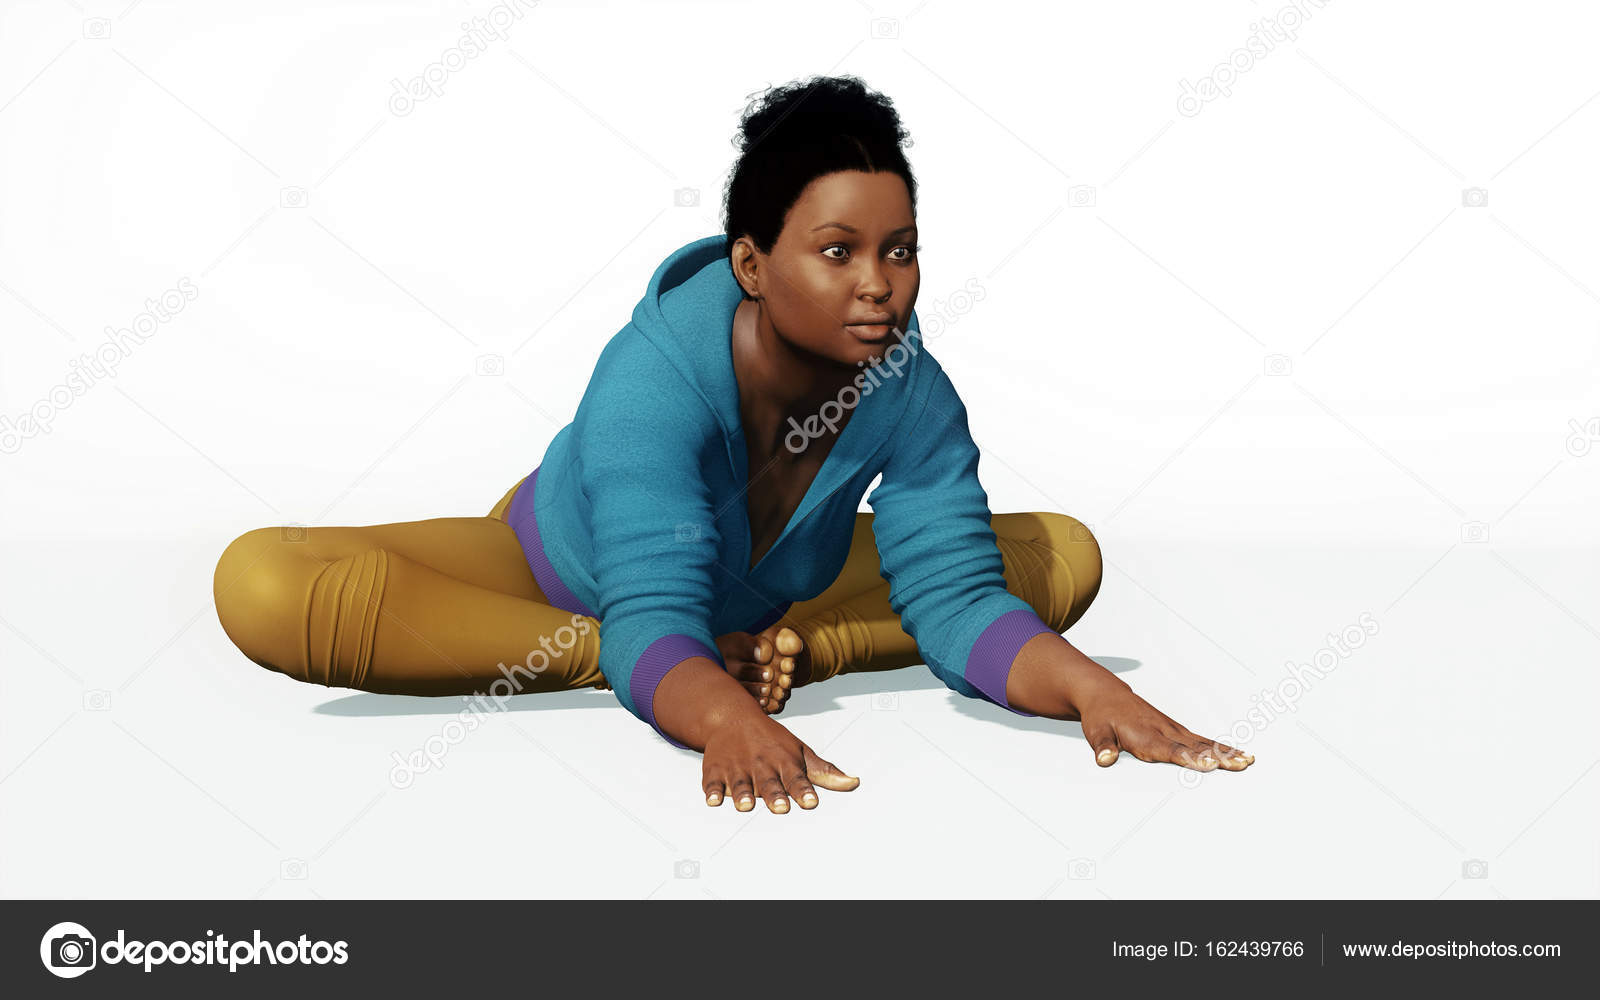 https://st3.depositphotos.com/2739581/16243/i/1600/depositphotos_162439766-stock-photo-plus-size-black-woman-in.jpg